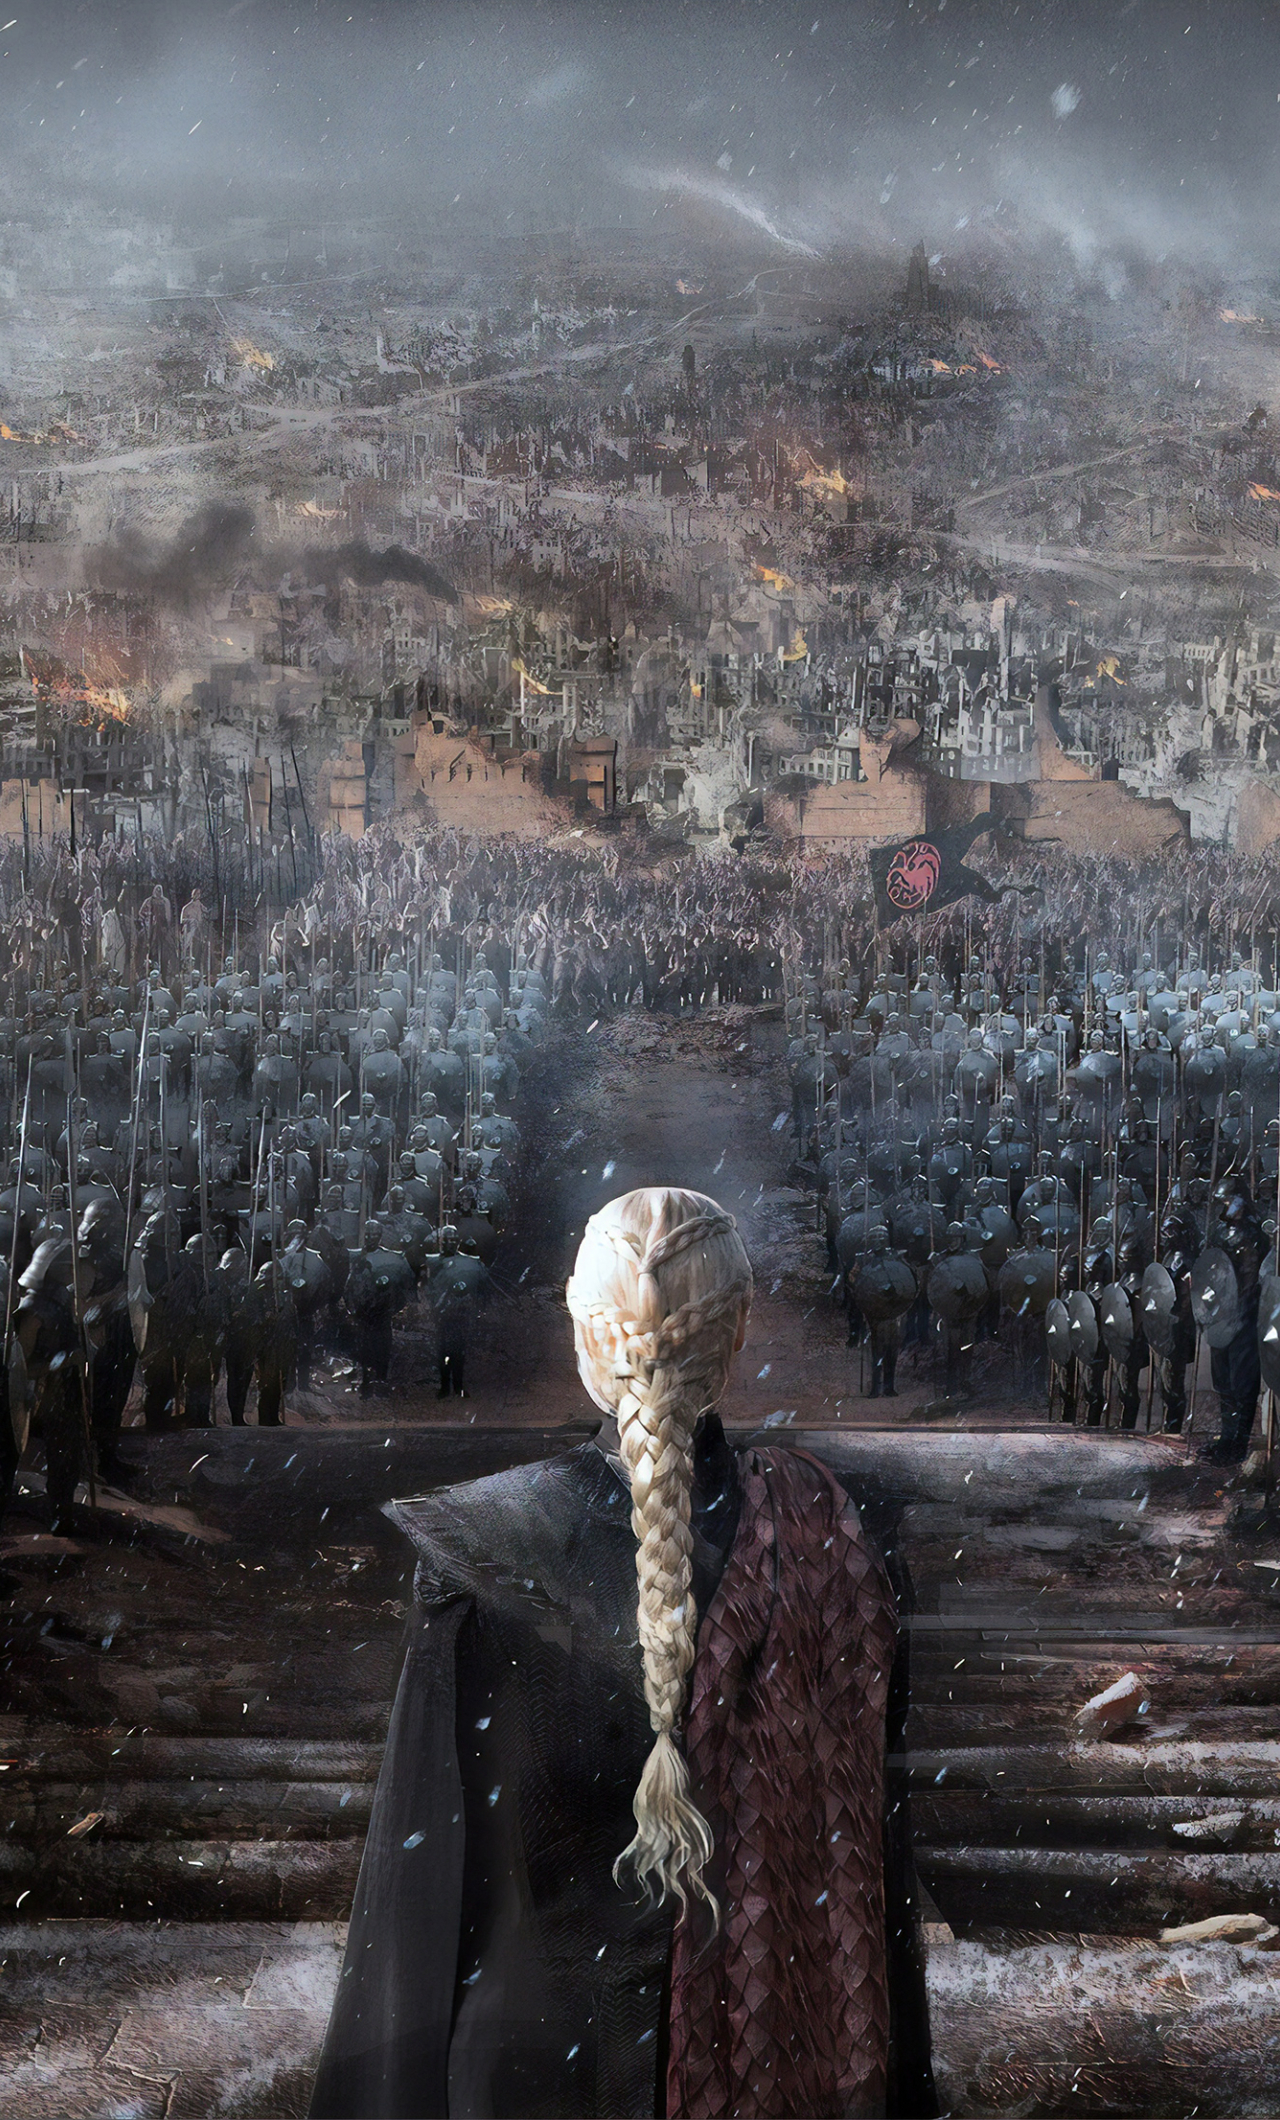 1280x21 Daenerys Targaryen Made Queen Iphone 6 Plus Wallpaper Hd Artist 4k Wallpapers Images Photos And Background